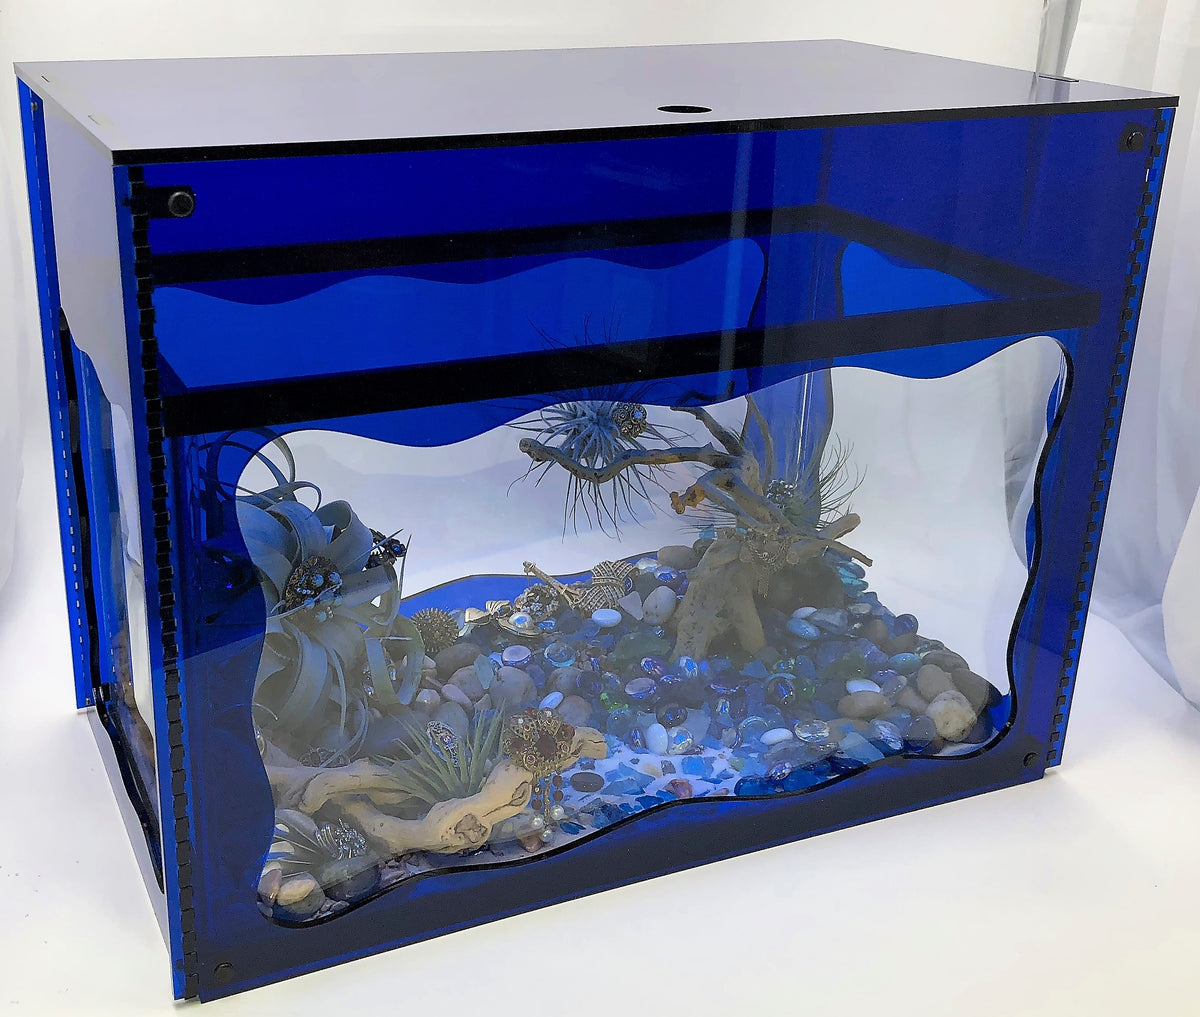 Aquarium & Terrarium Tank | AquaTerra Pet Shipping Accessories - Decor Free 10-Gallon | Fits